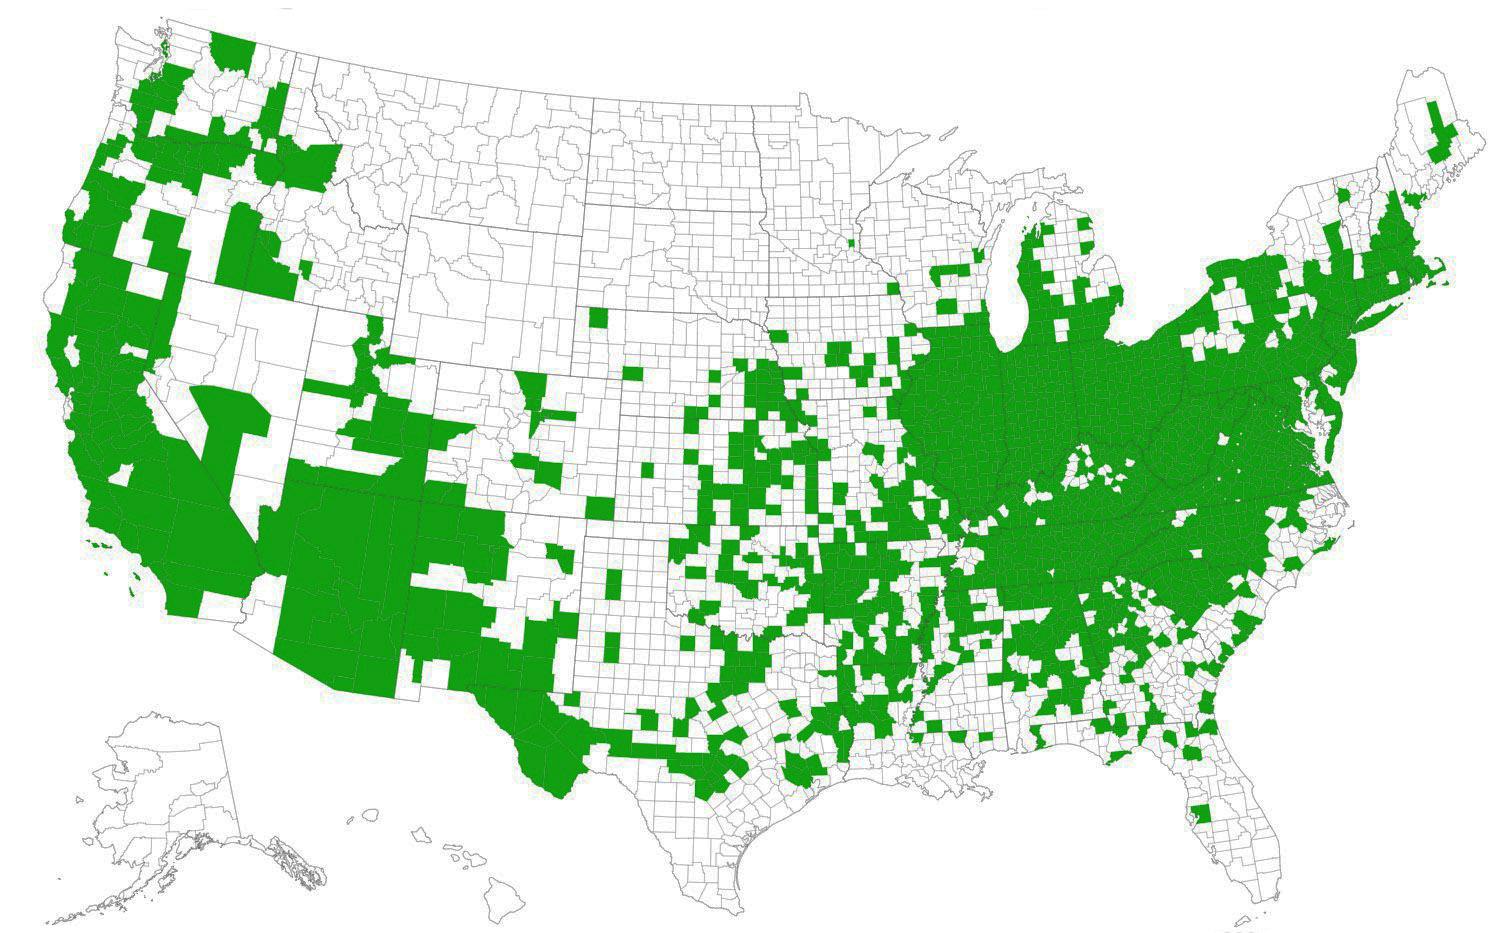 Tree-of-heaven county distribution map. Courtesy eddmaps.org